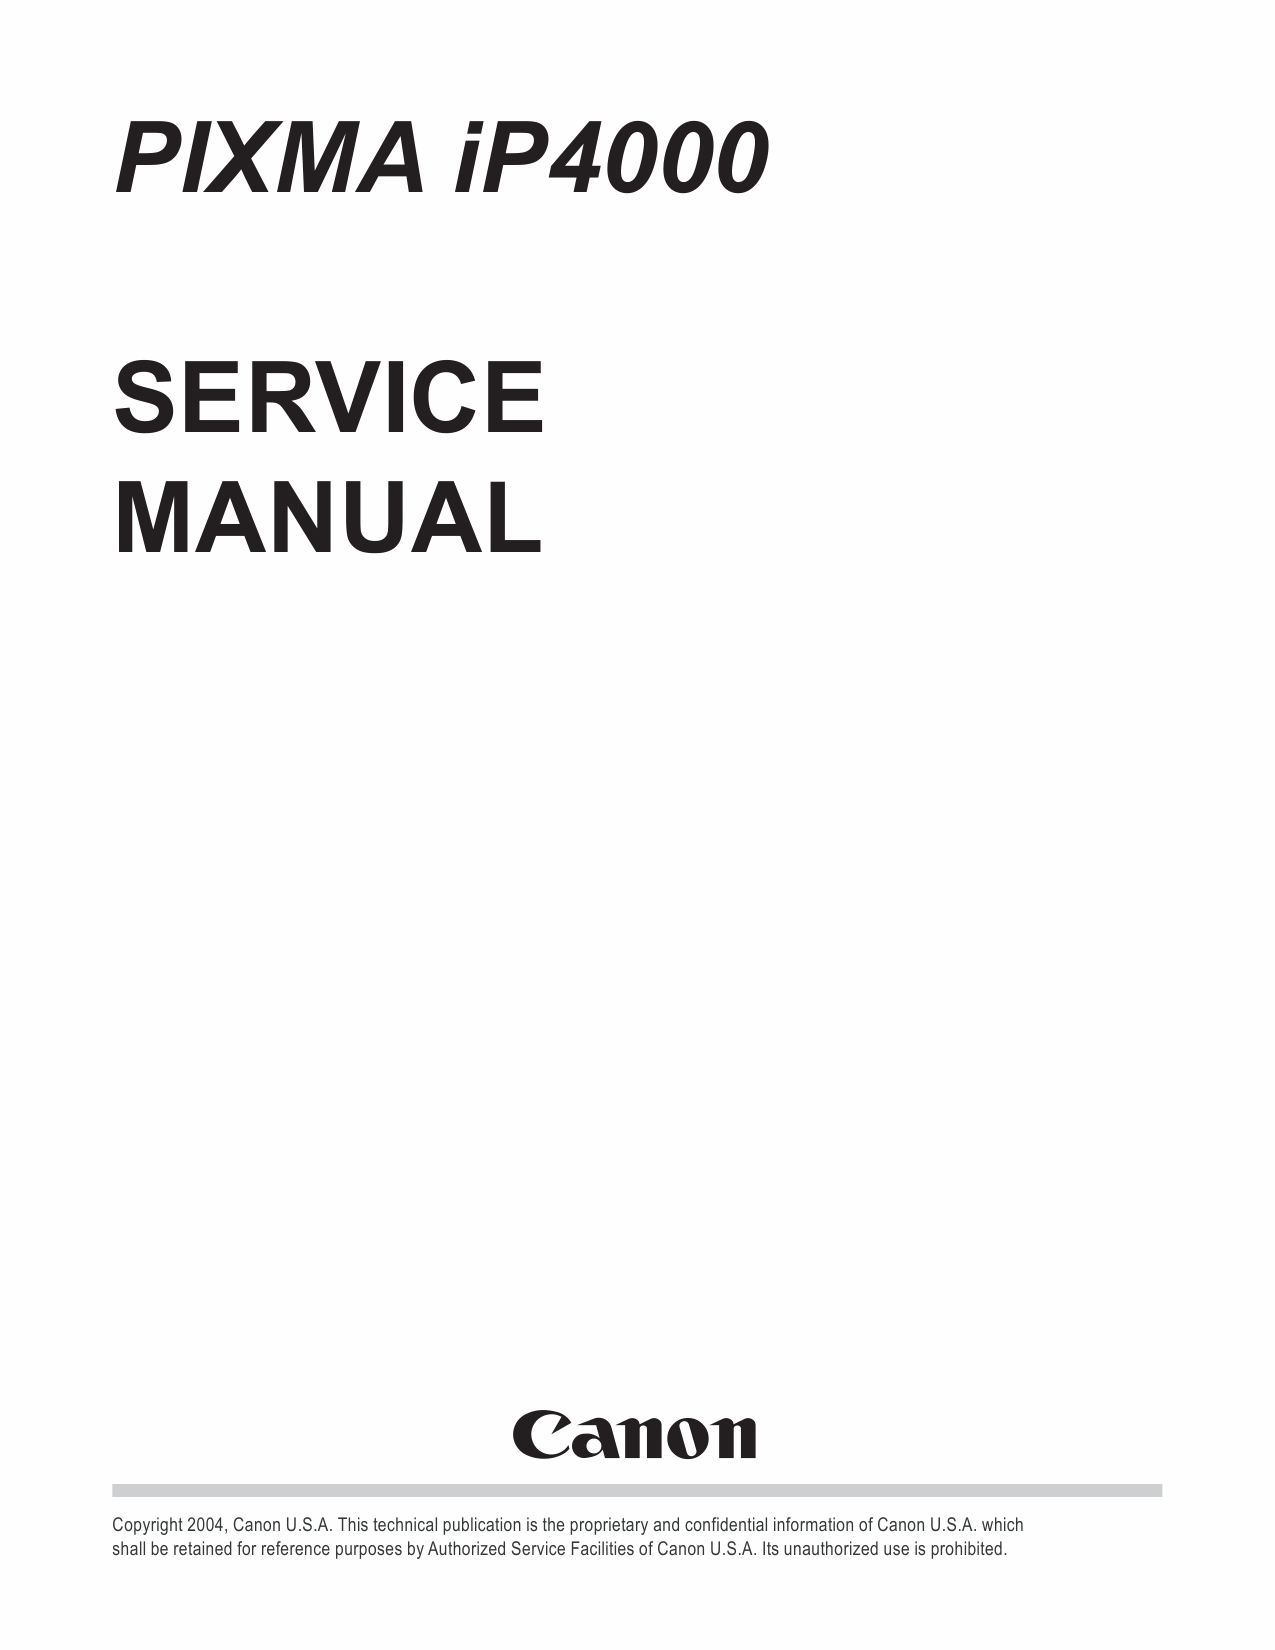 Canon PIXMA iP4000 Service Manual-1